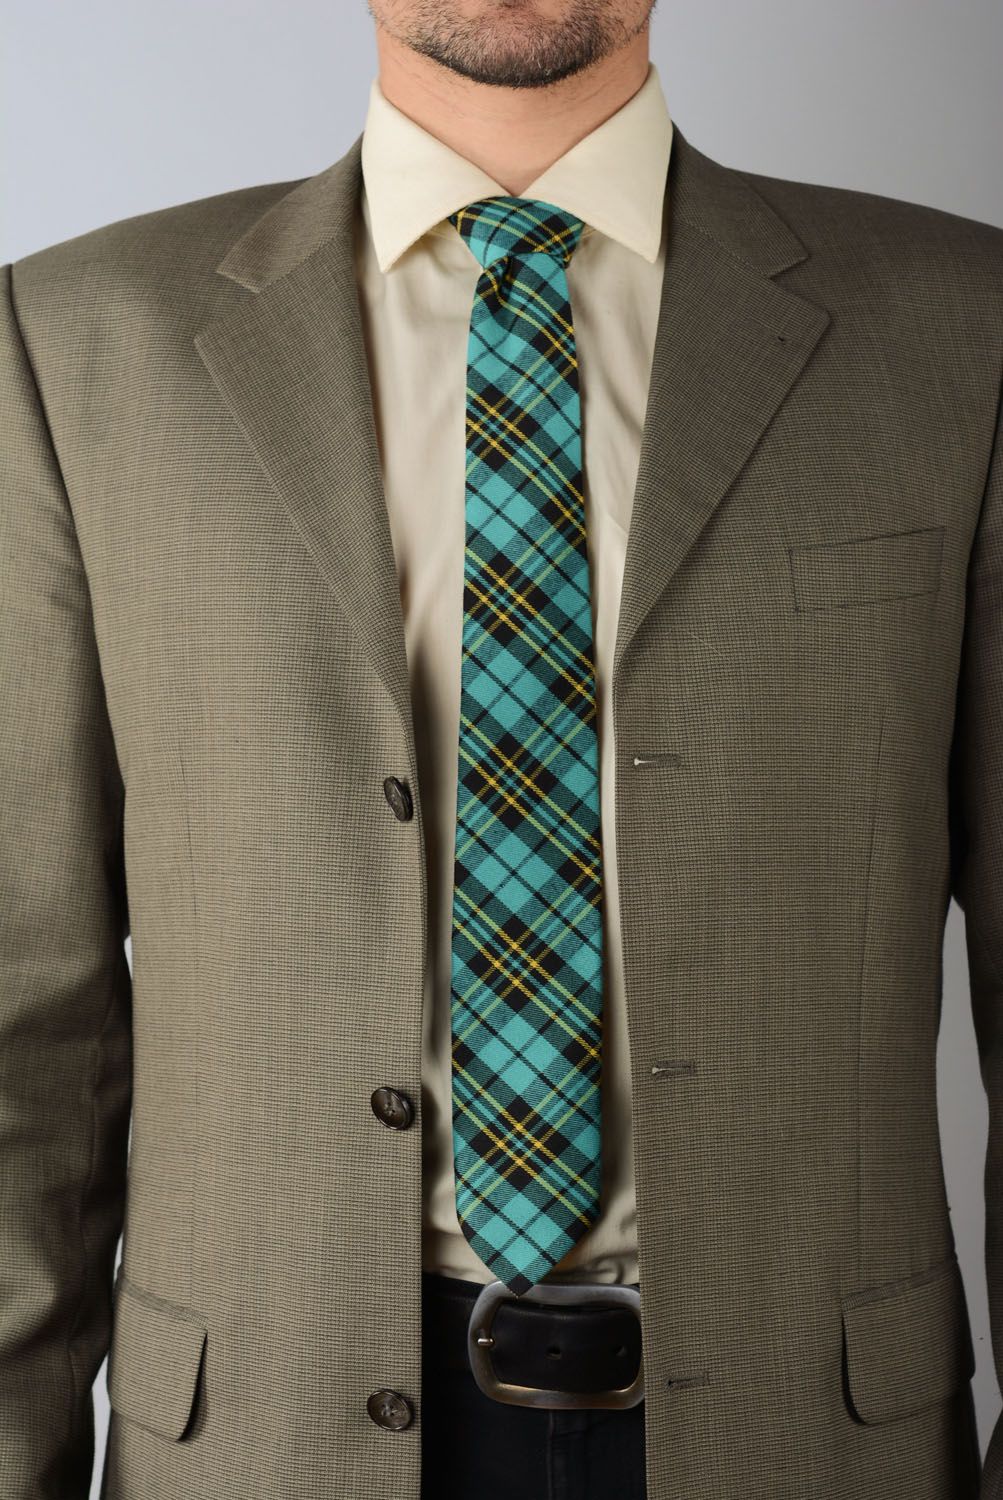 Turquoise checkered tie photo 1